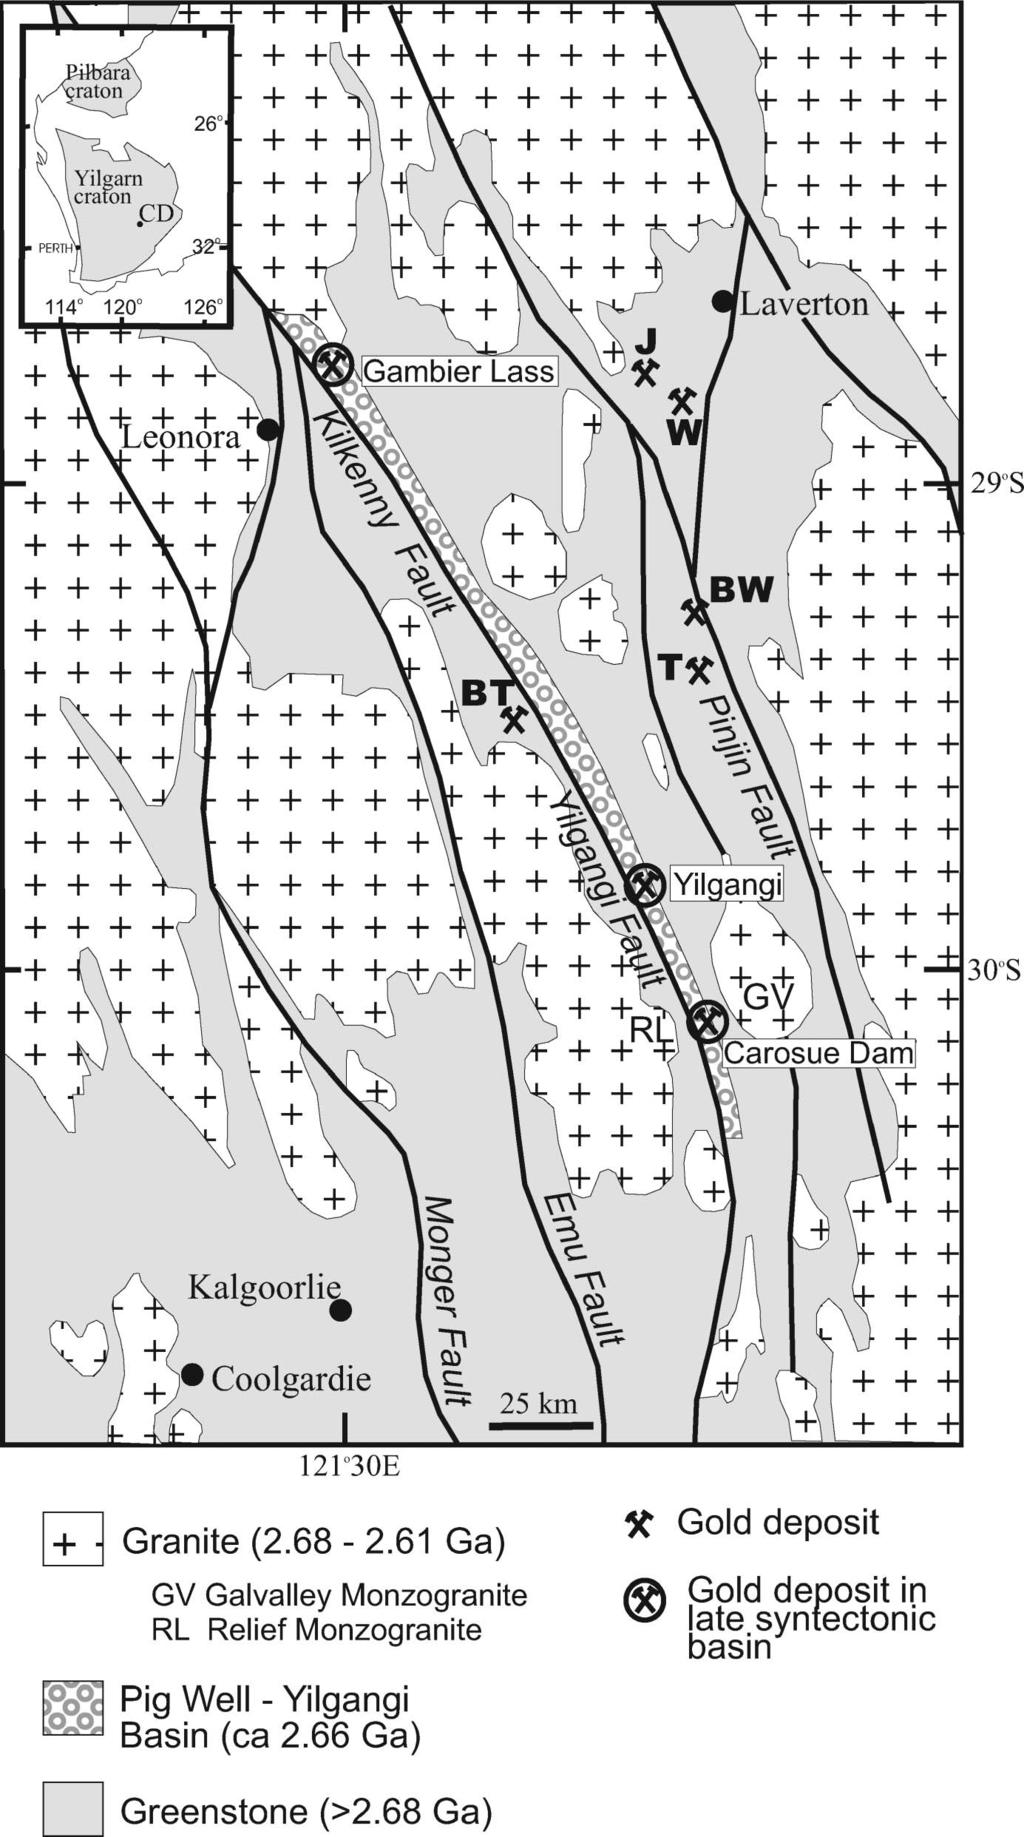 1062 W. K. Witt et al. Figure 1 Geological setting of the Carosue Dam gold camp.